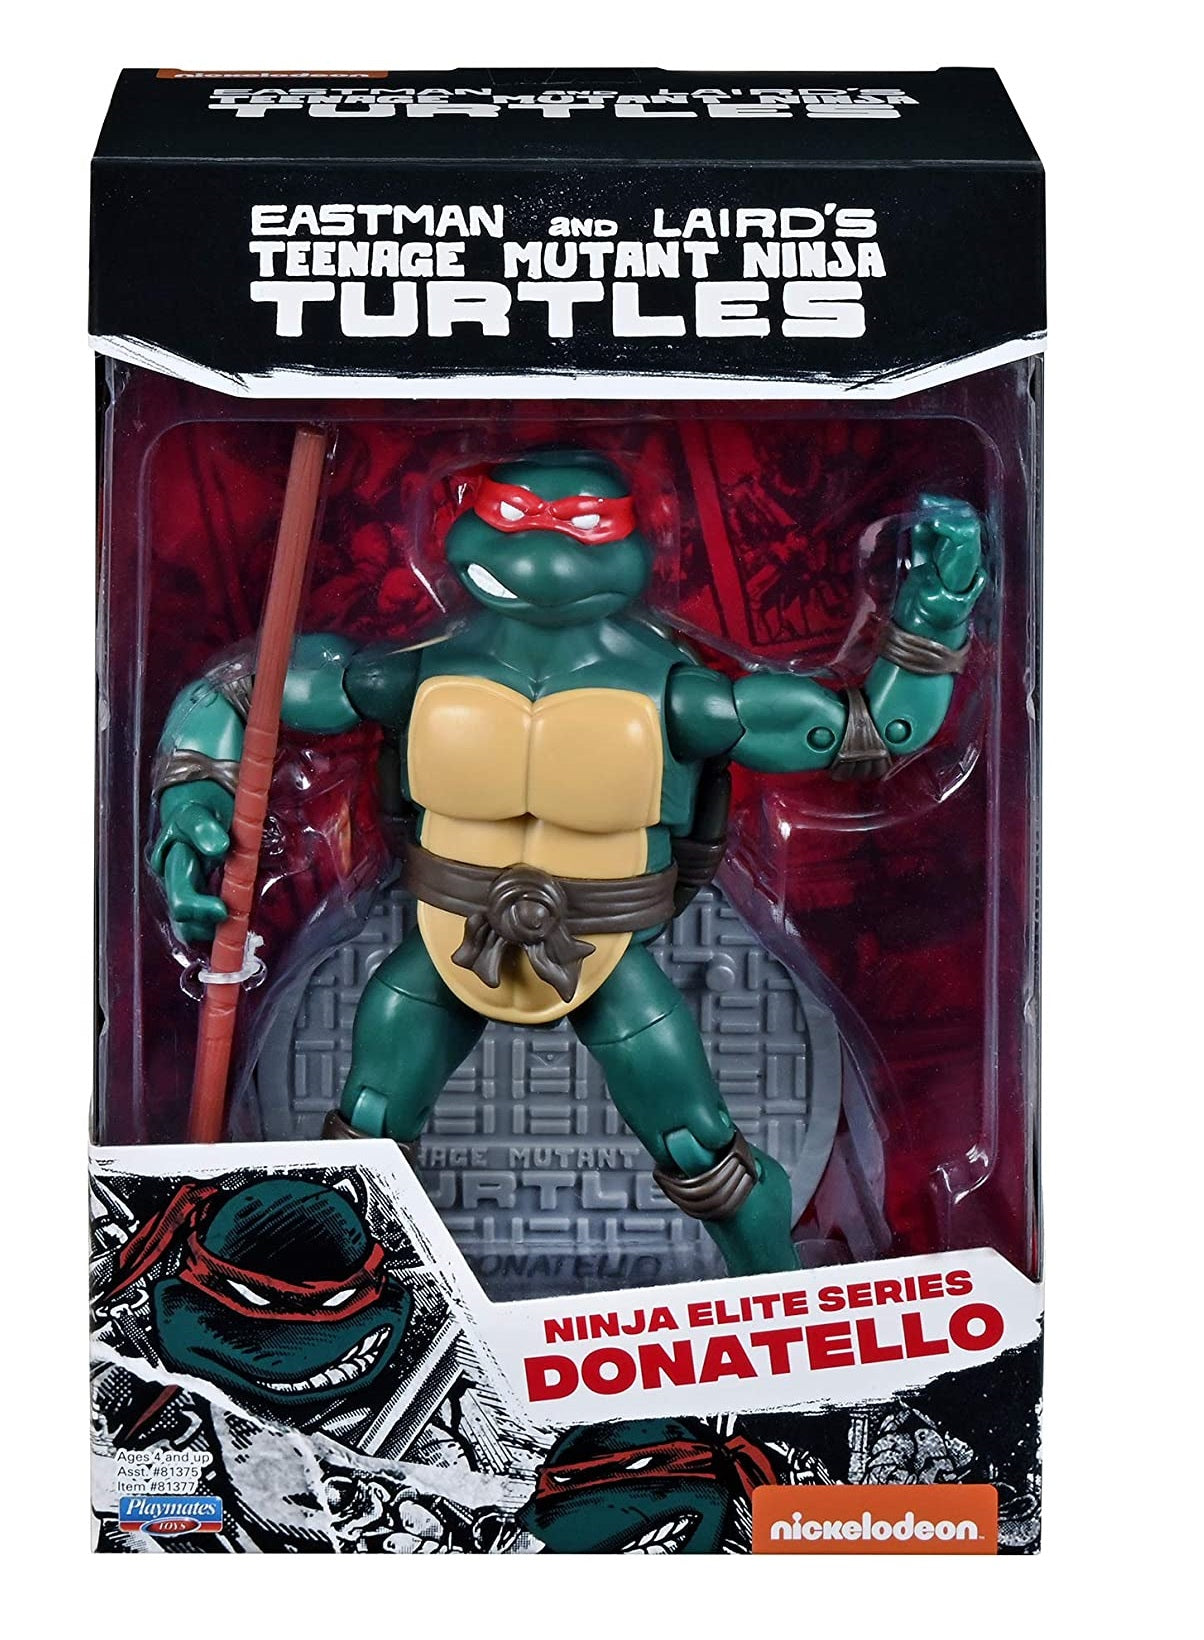 TMNT Ninja Elite Series Donatello figure